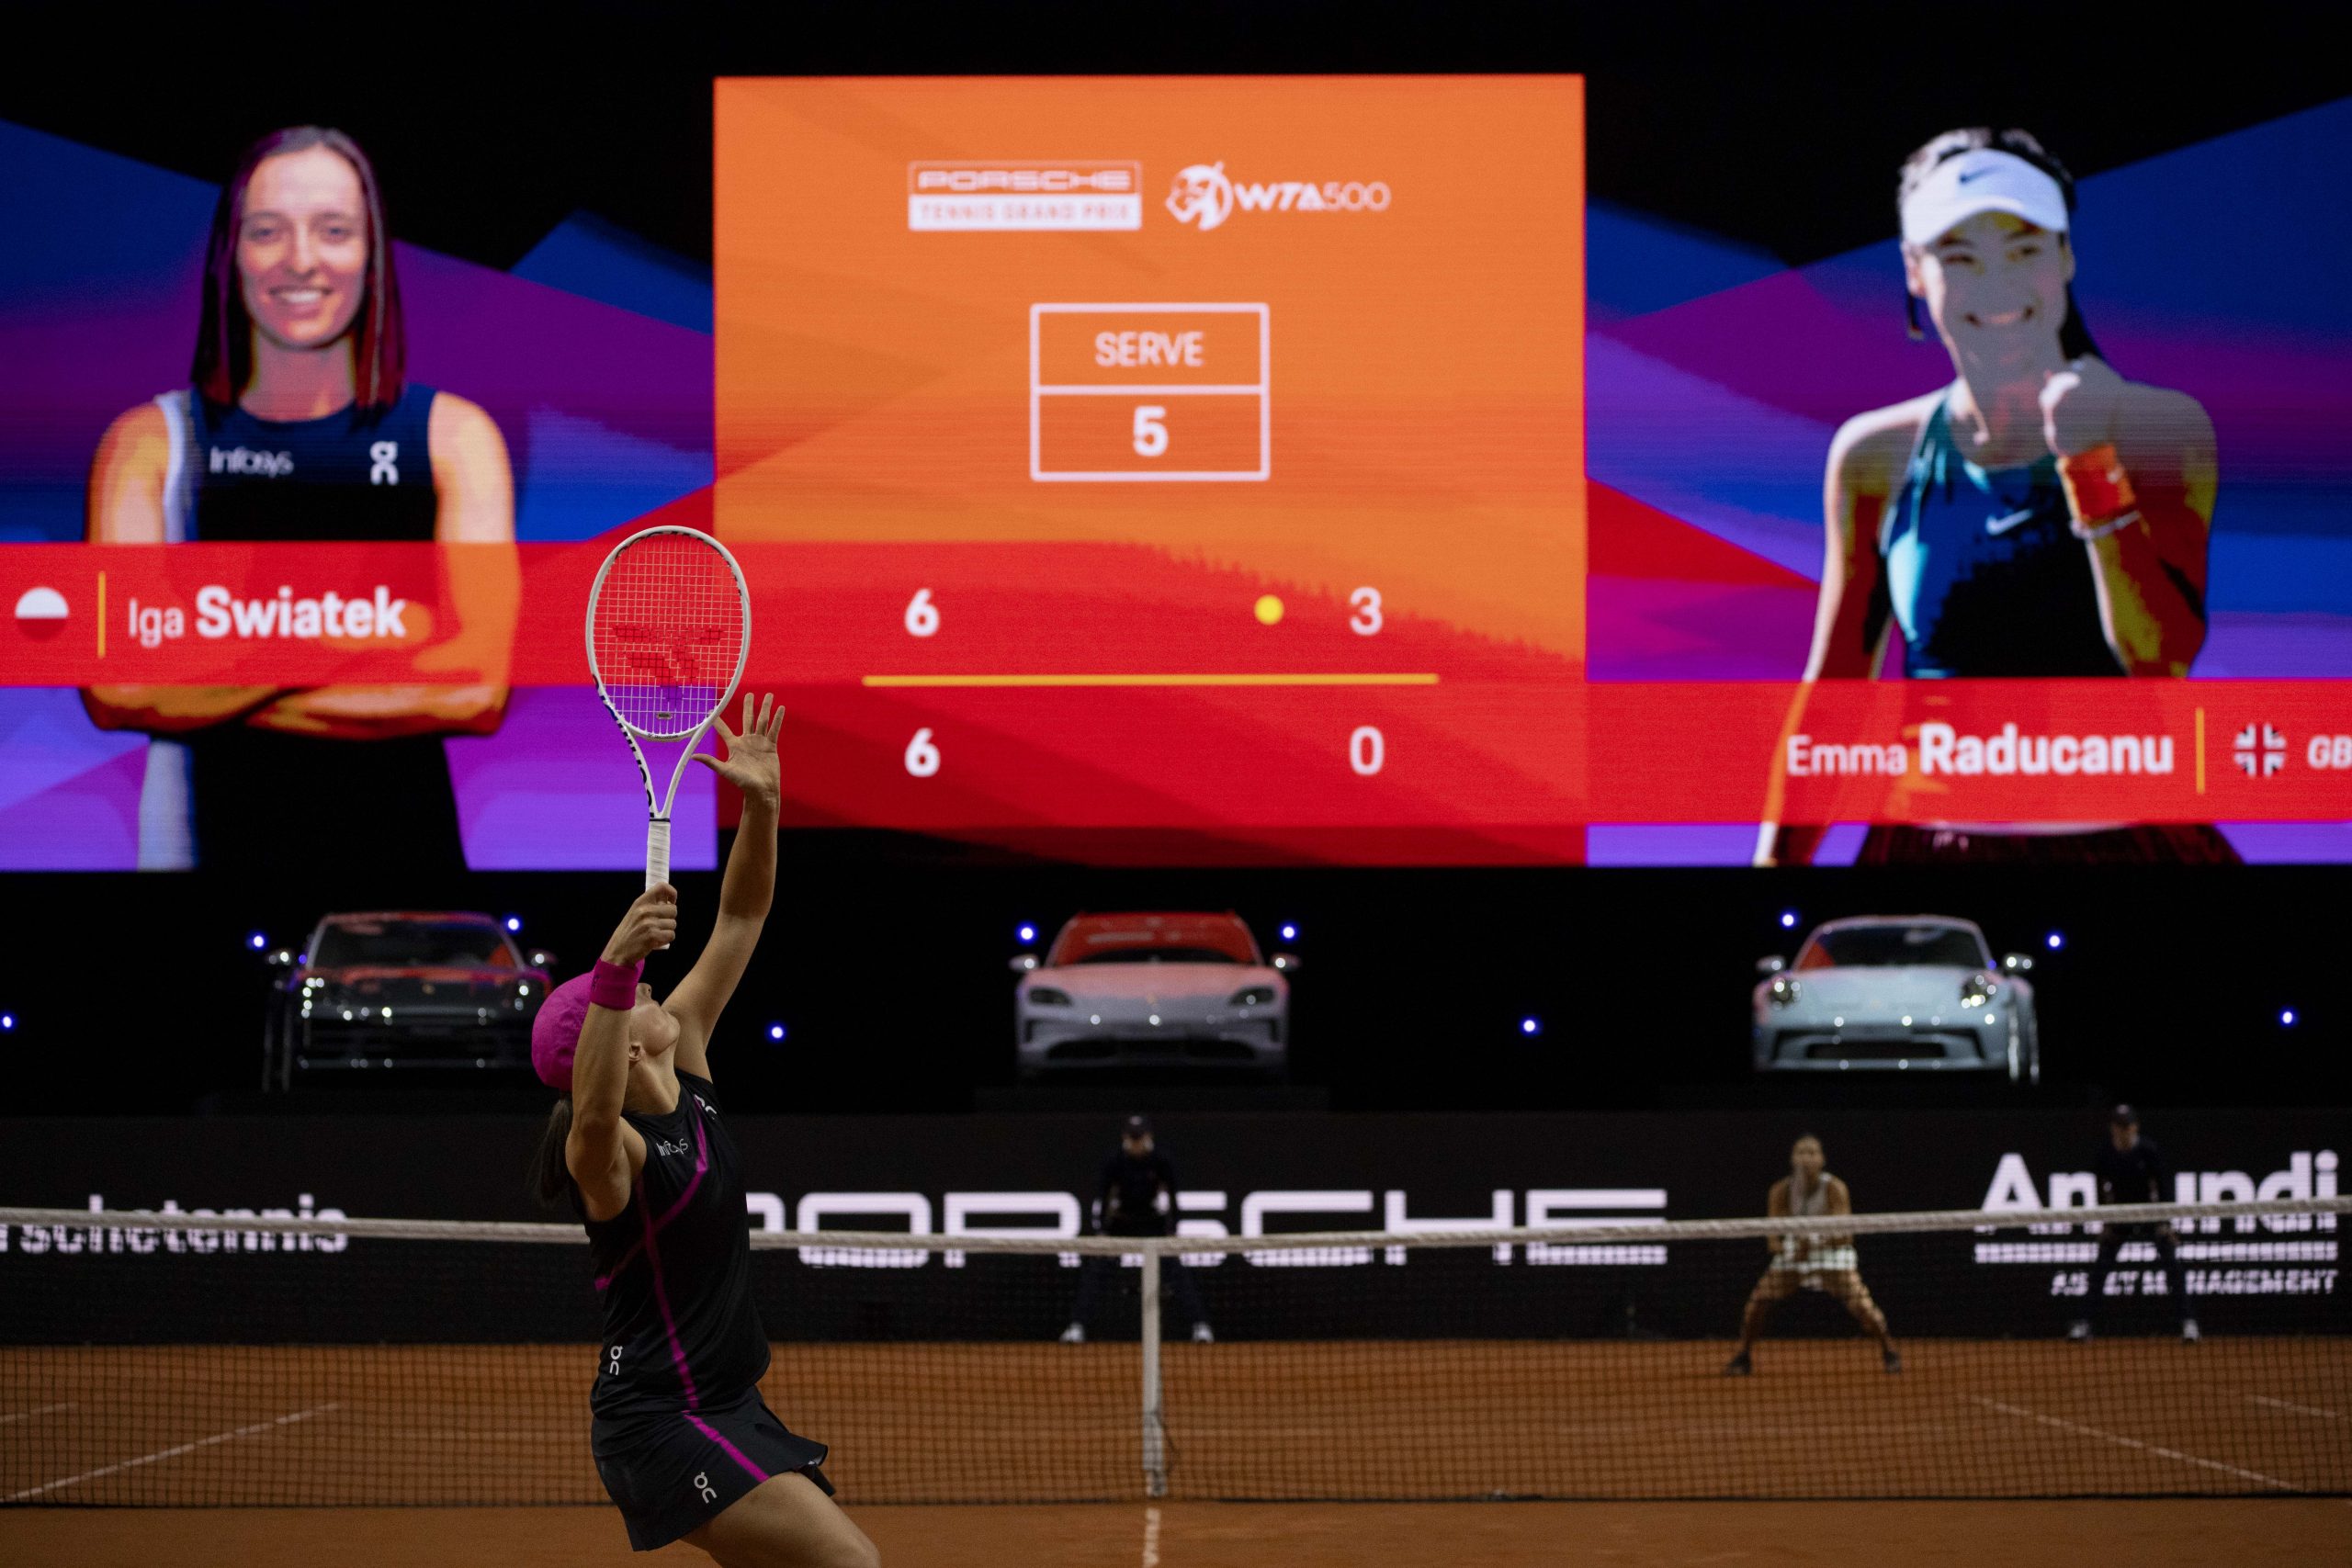 Tennis fever in the Porsche Arena Stuttgart: WTA action at its peak